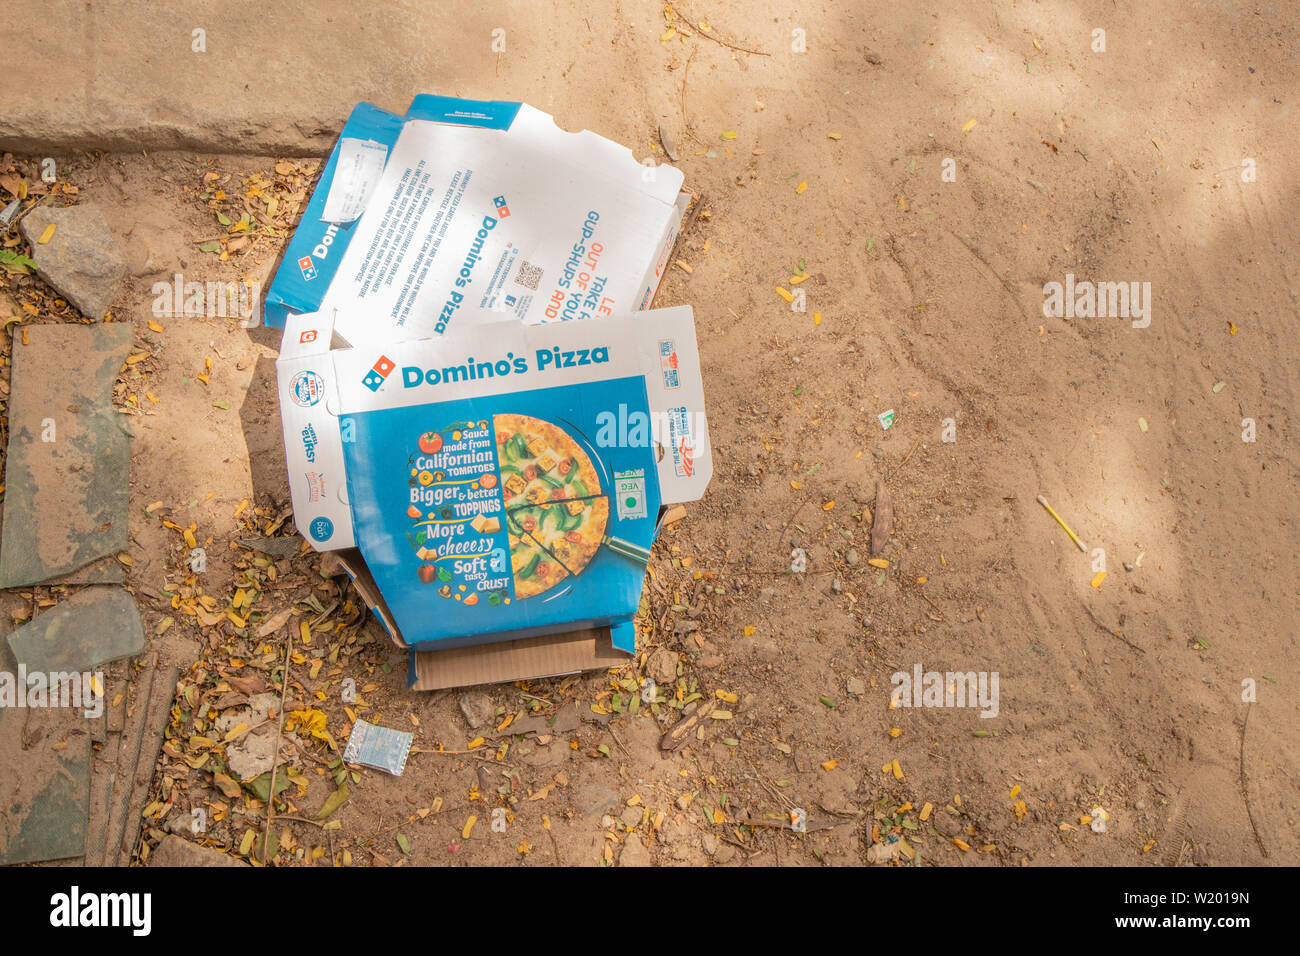 Bengaluru, India June 17, 2019 : Domino's Pizza Box thrown away on the road side. Stock Photo